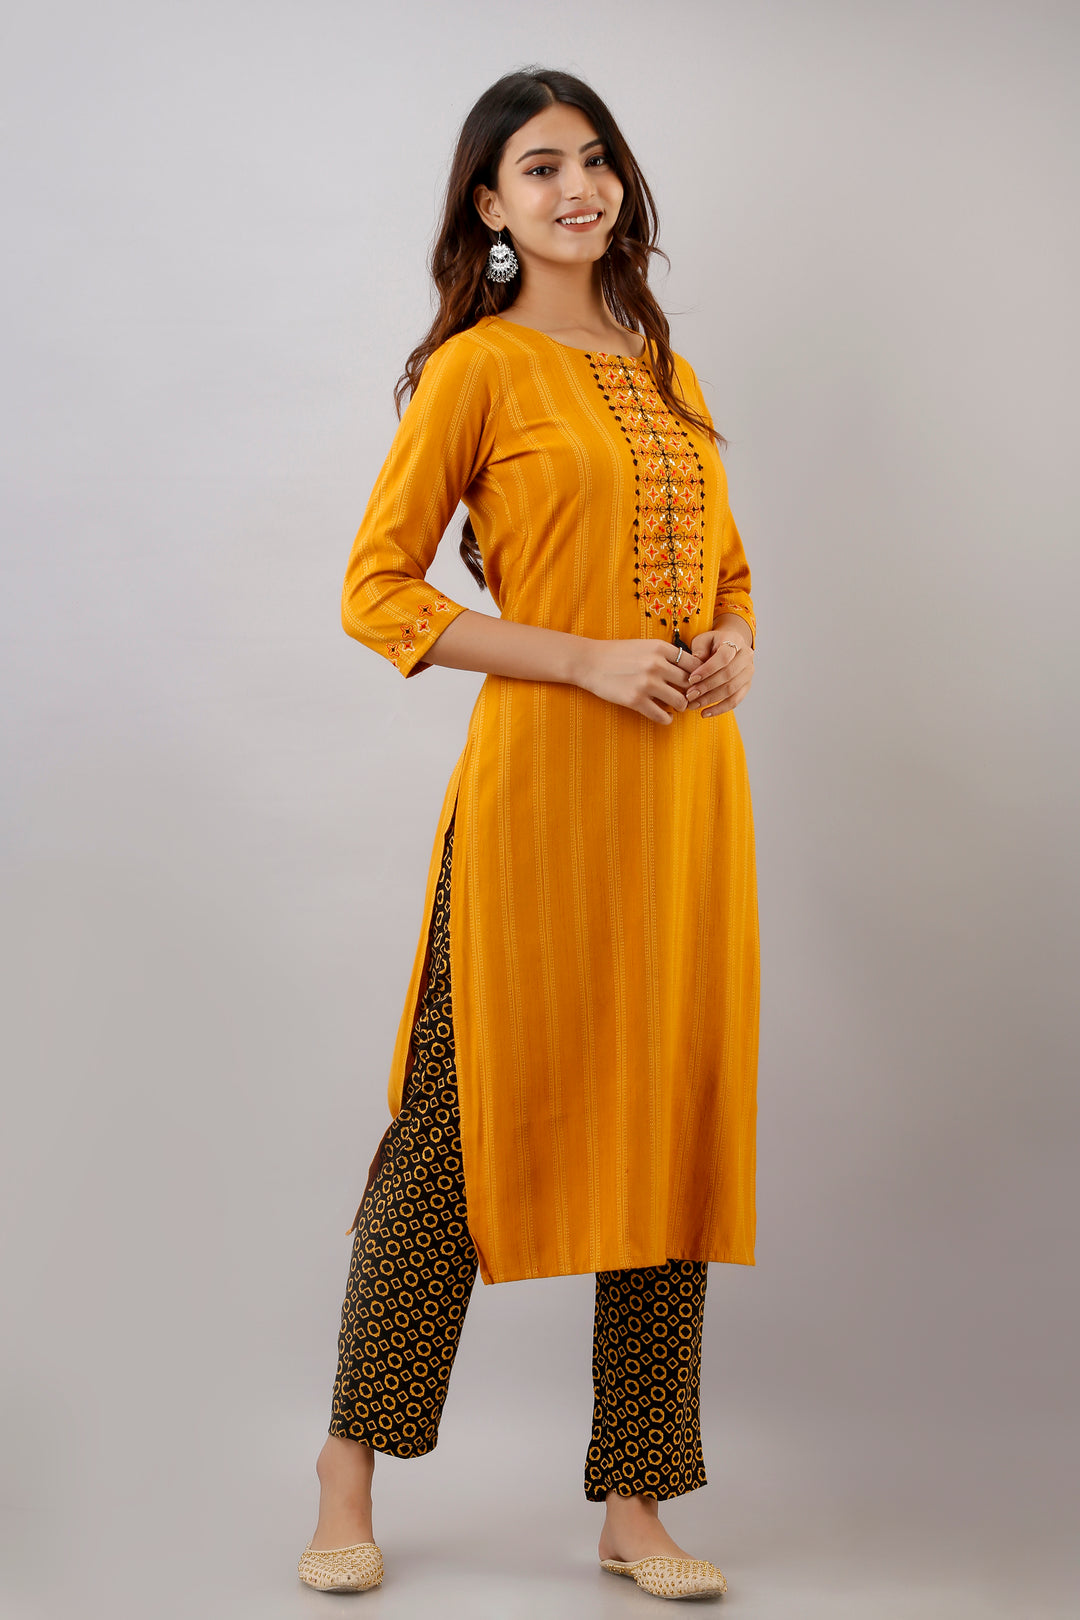 Buy online Patrorna Women Regular Fit Churidar Pant from Churidars &  Salwars for Women by Patrorna for ₹700 at 65% off